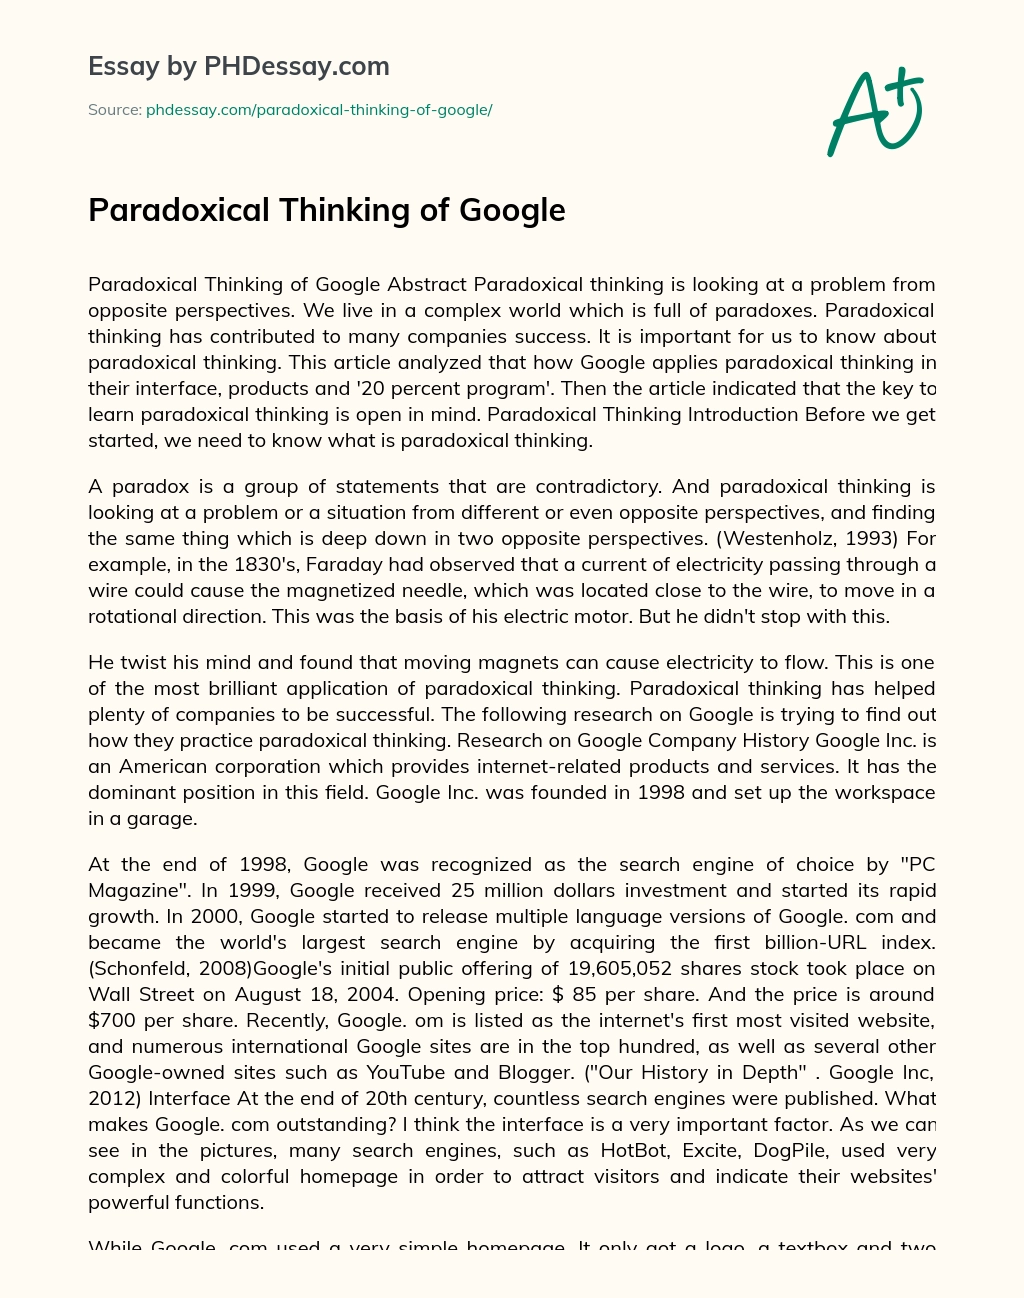 Paradoxical Thinking of Google essay